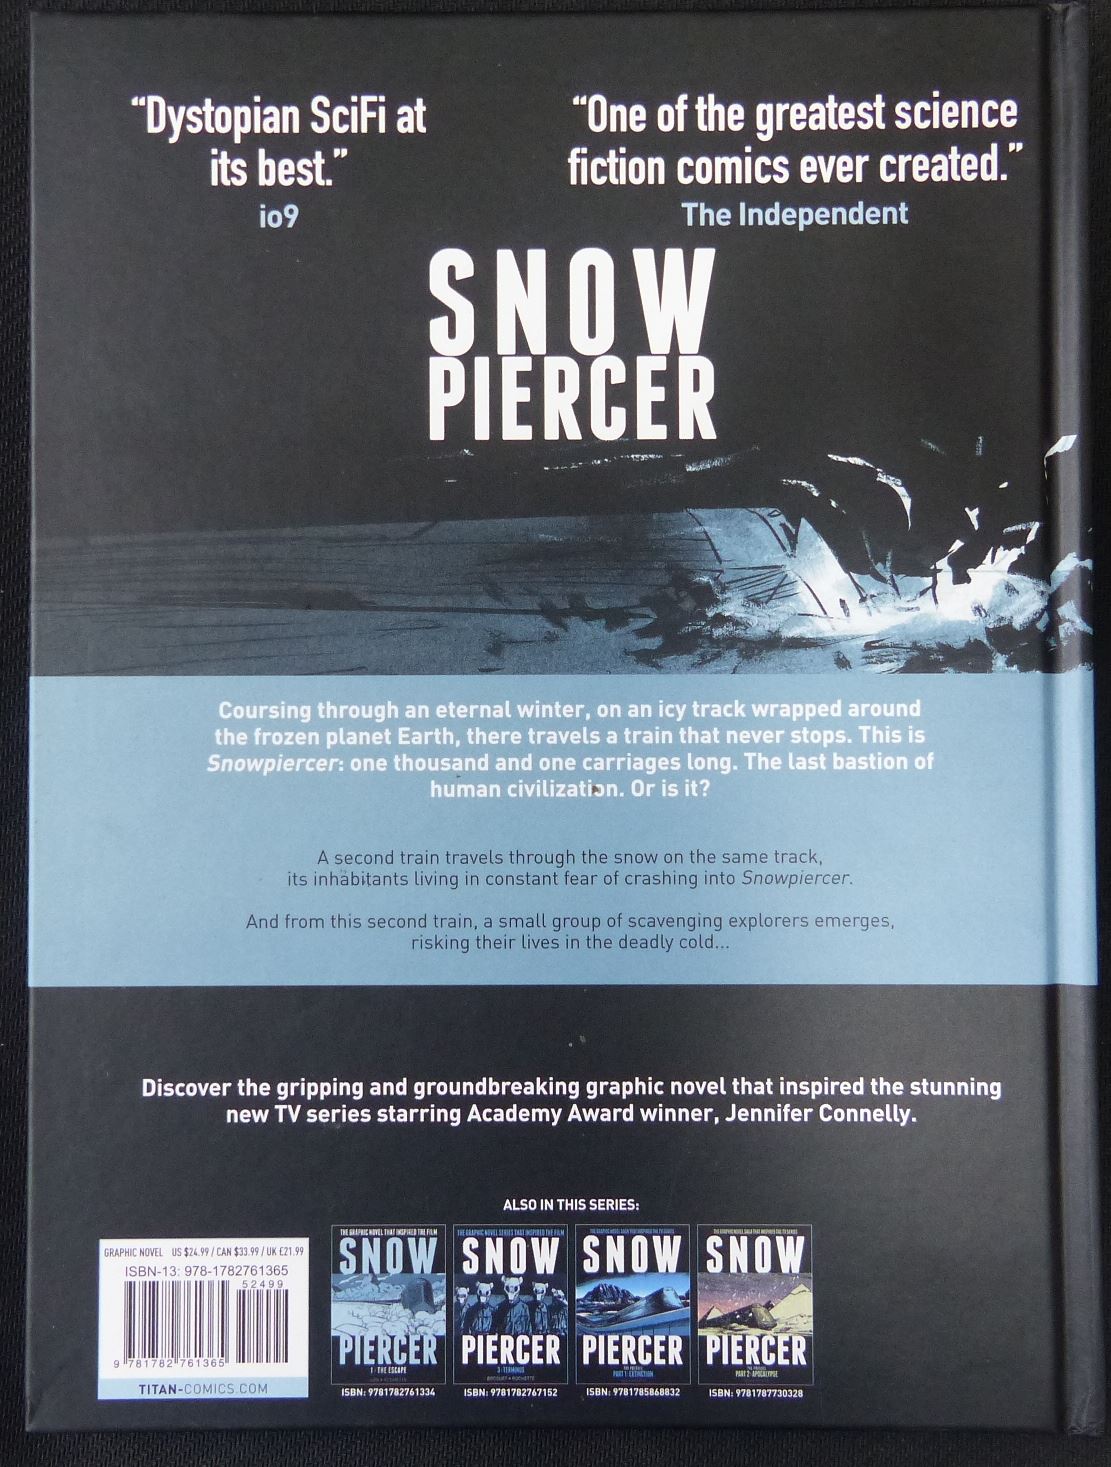 Snow piercer 2: the Explorers - Hardback - Titan Graphic Novel #29H